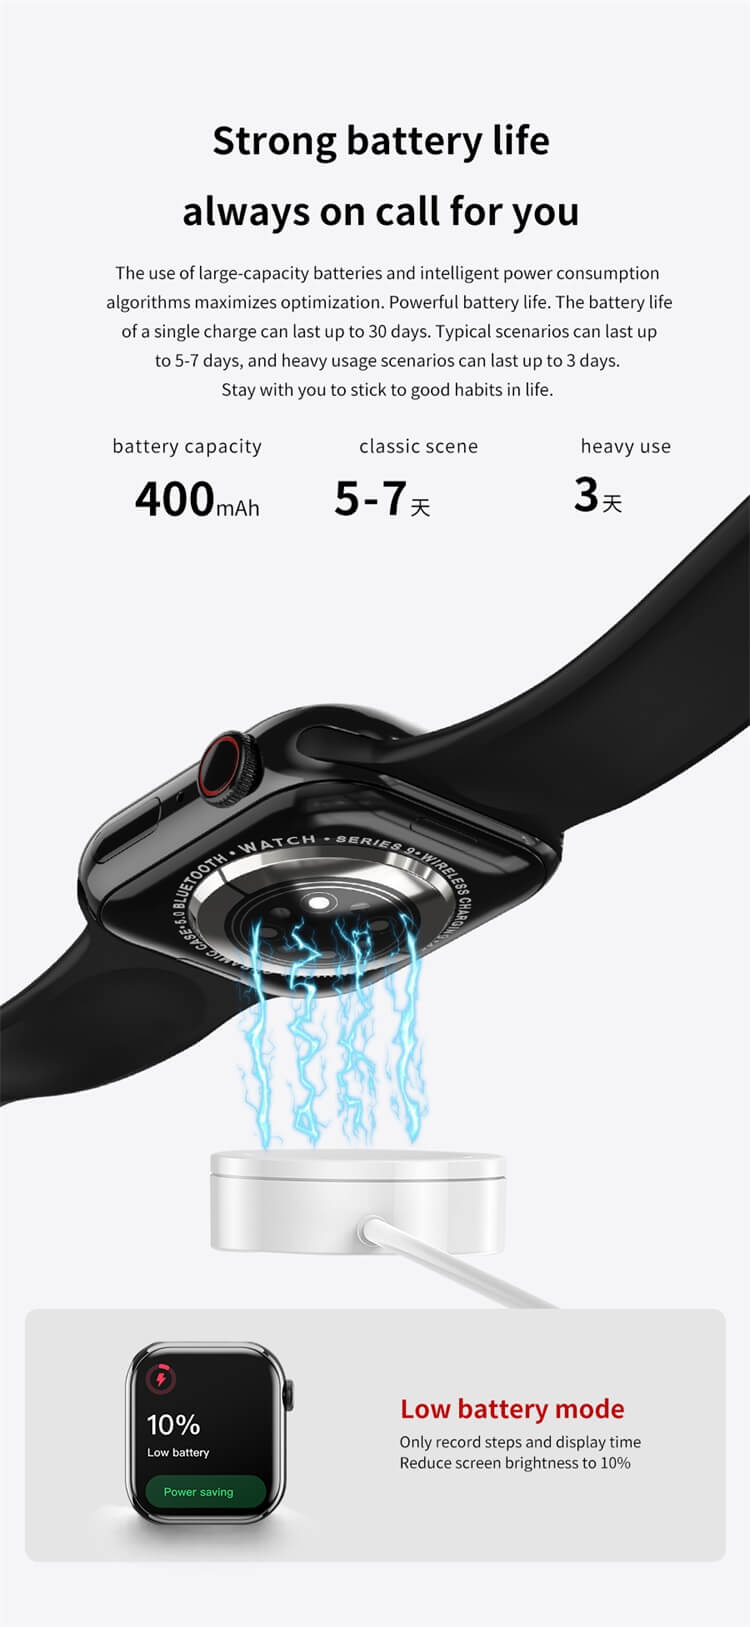 IW9 Έξυπνο ρολόι με μεγάλη οθόνη 2,05 ιντσών-Shenzhen Shengye Technology Co.,Ltd